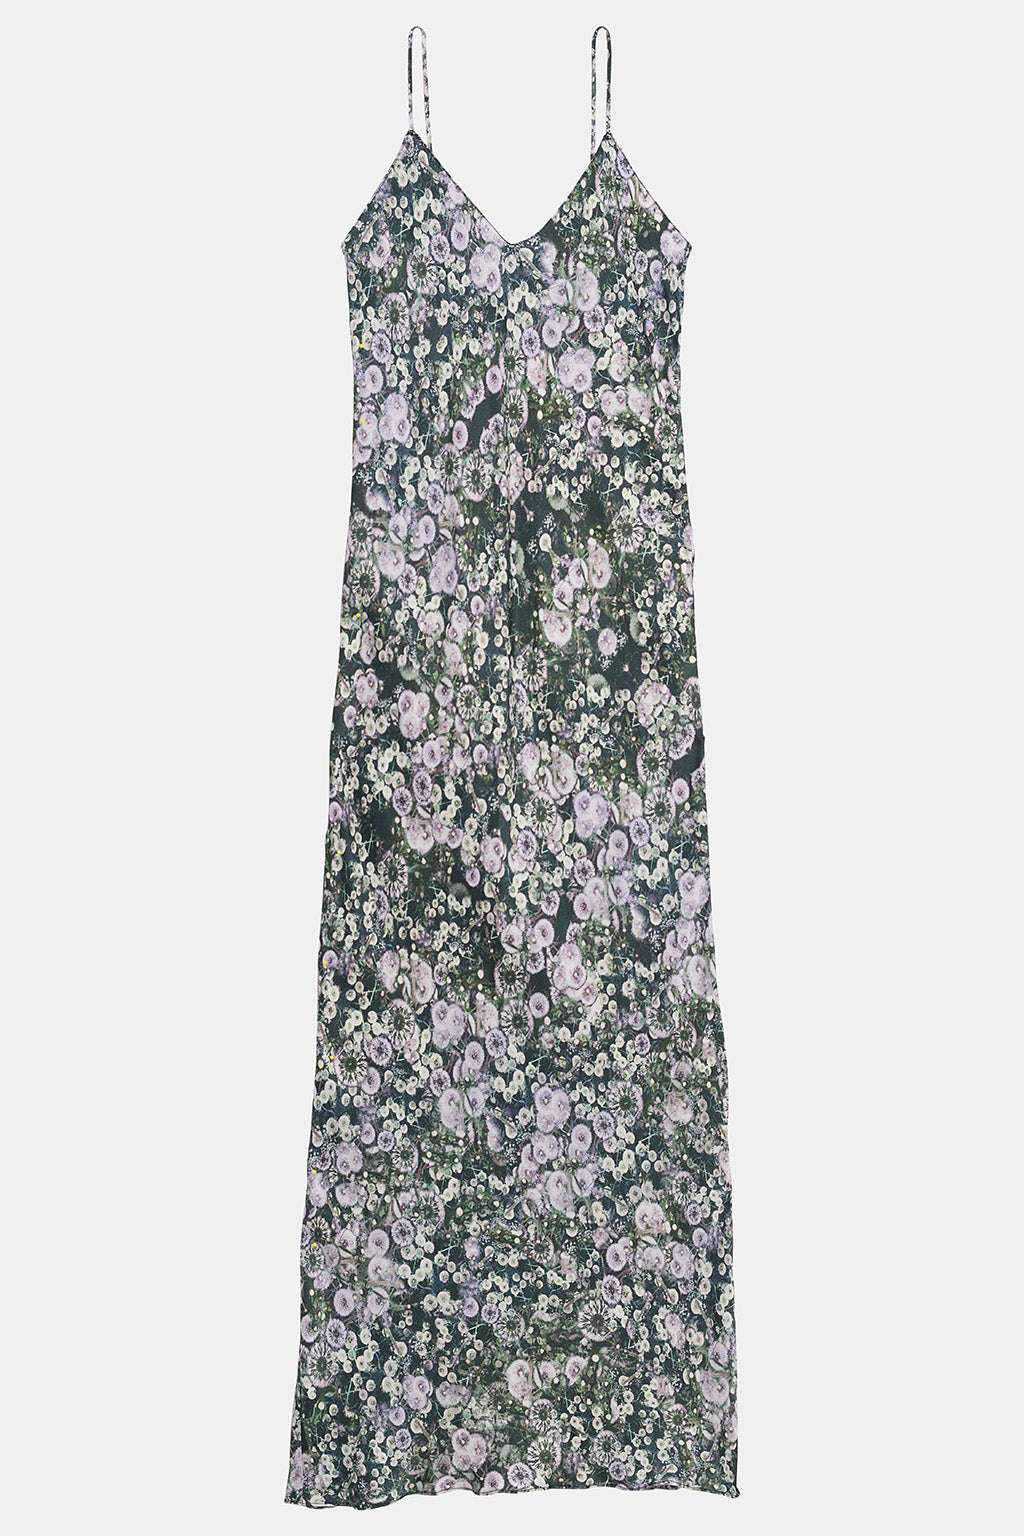 floral vegan dress